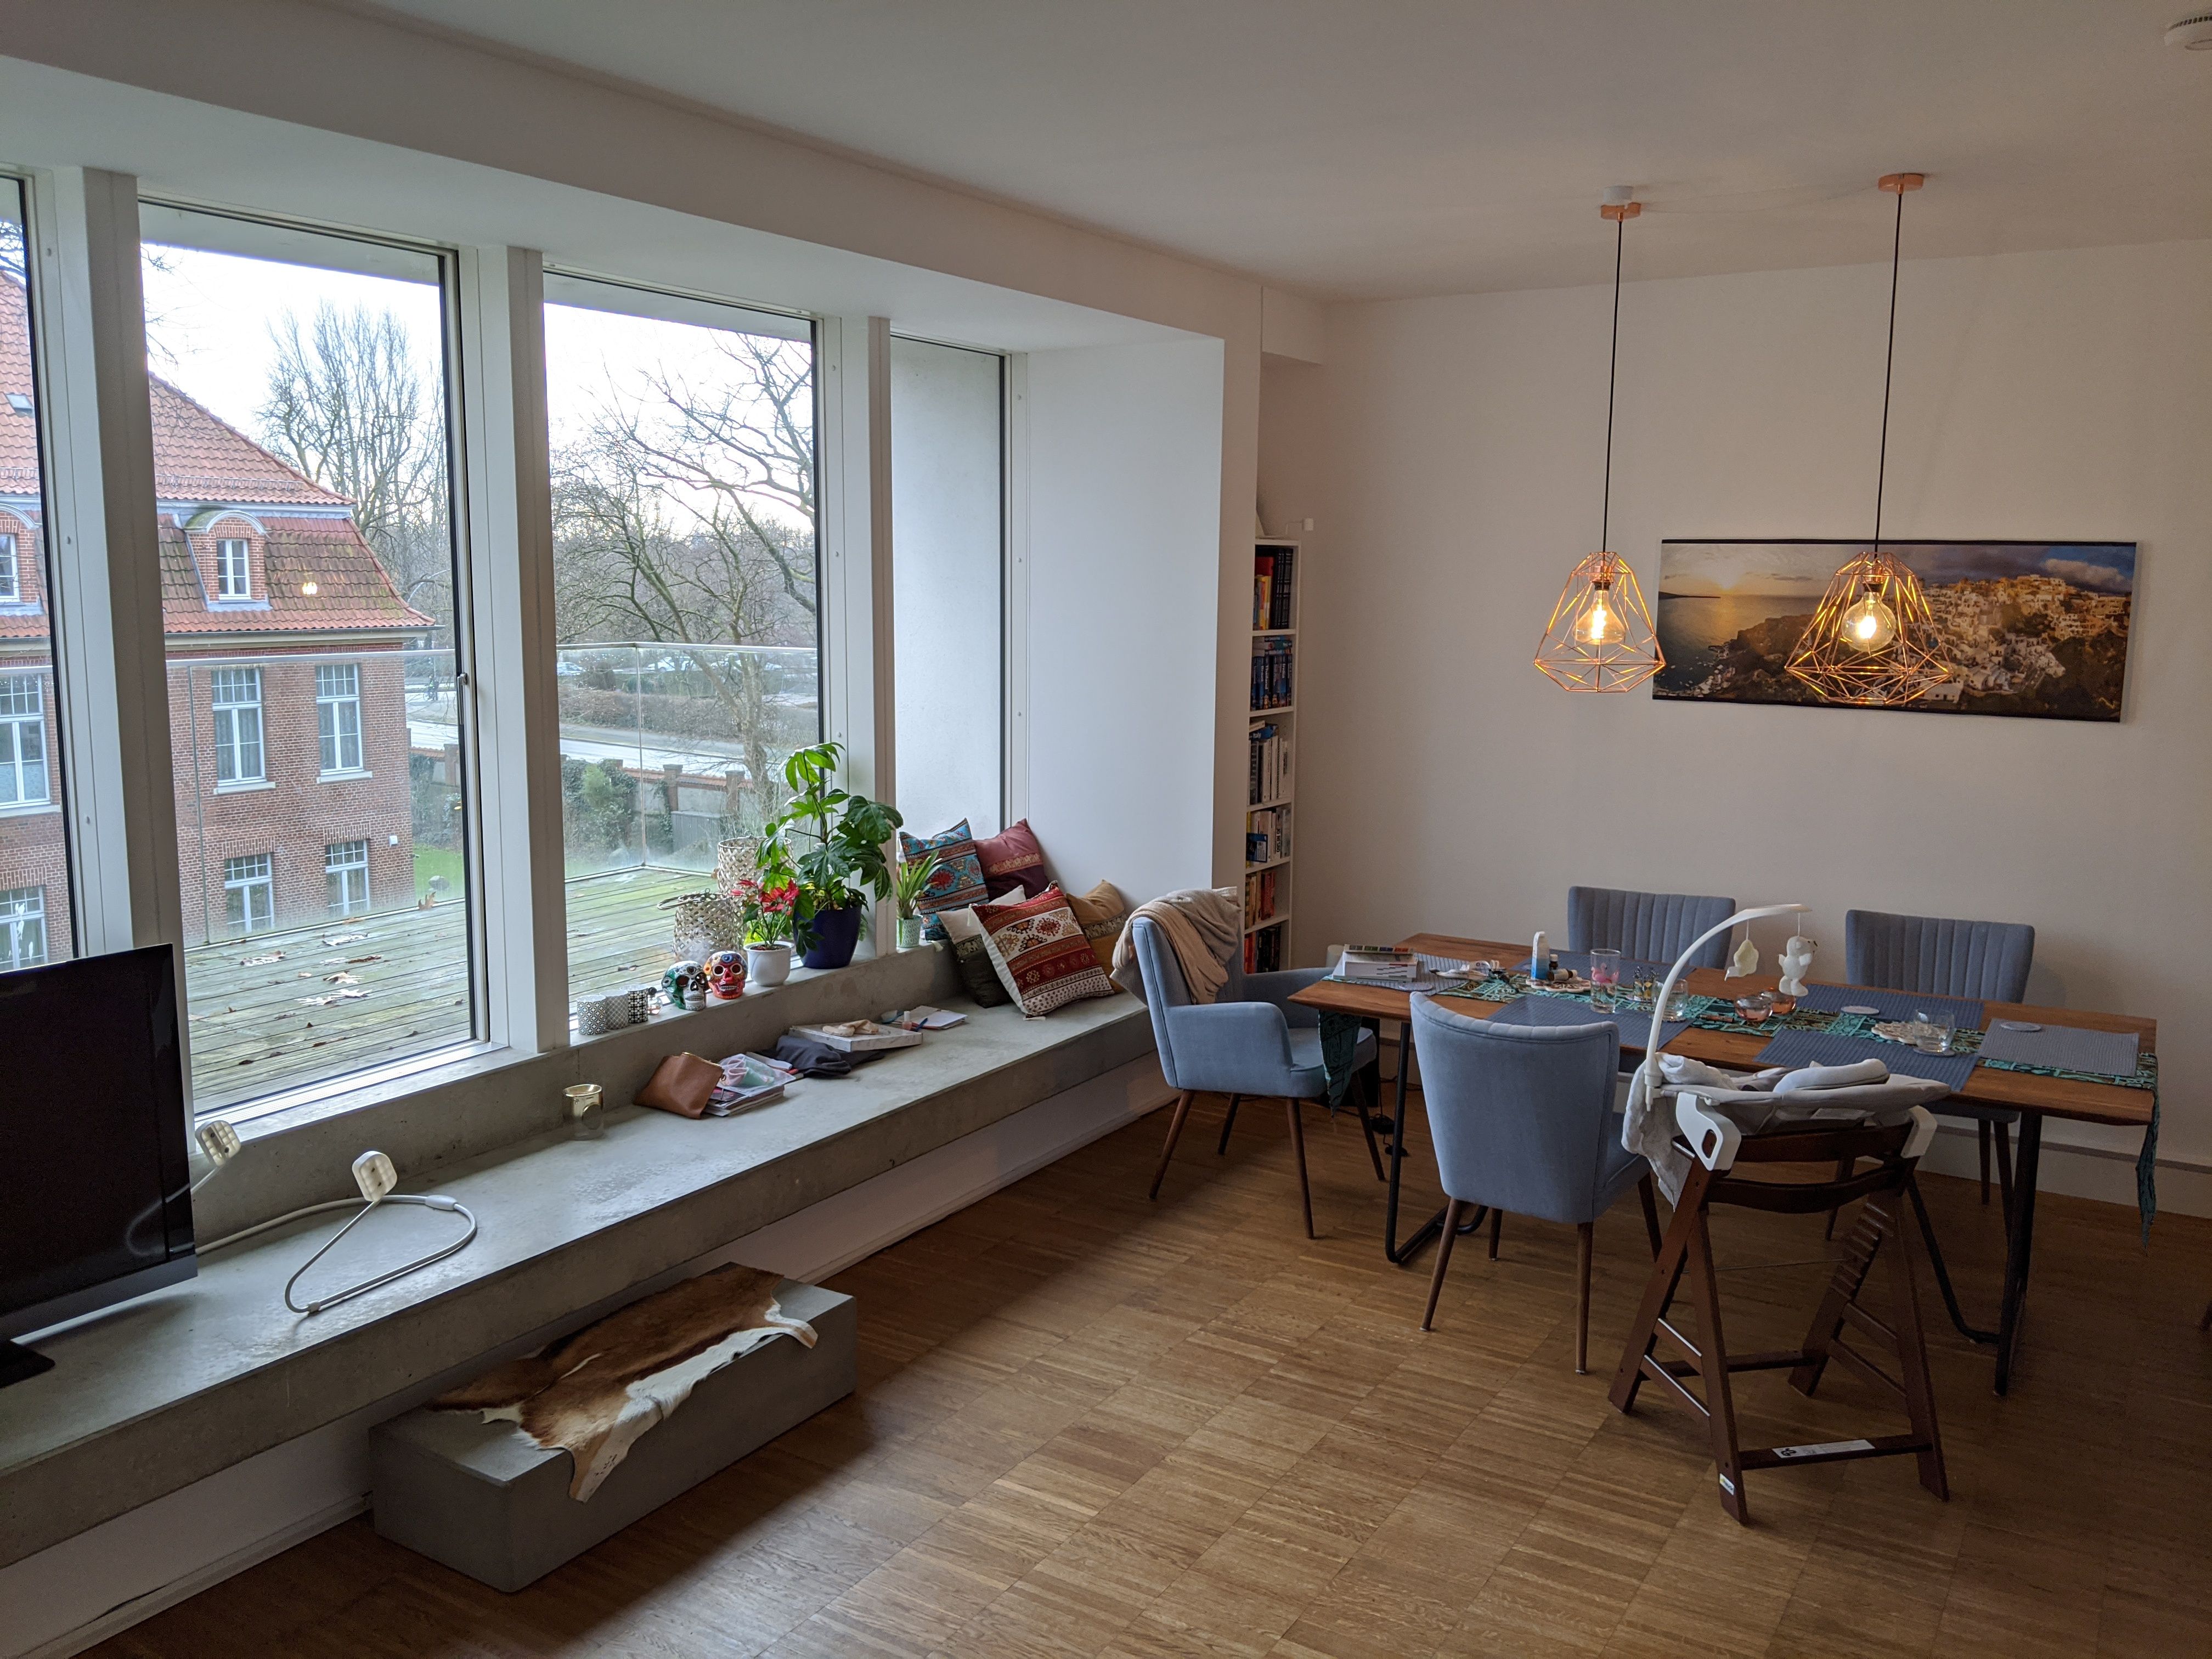 1 bedroom apartment at Andreas-Knack-Ring 12, 22307 Hamburg, Germany |  #7188225 | Rentberry